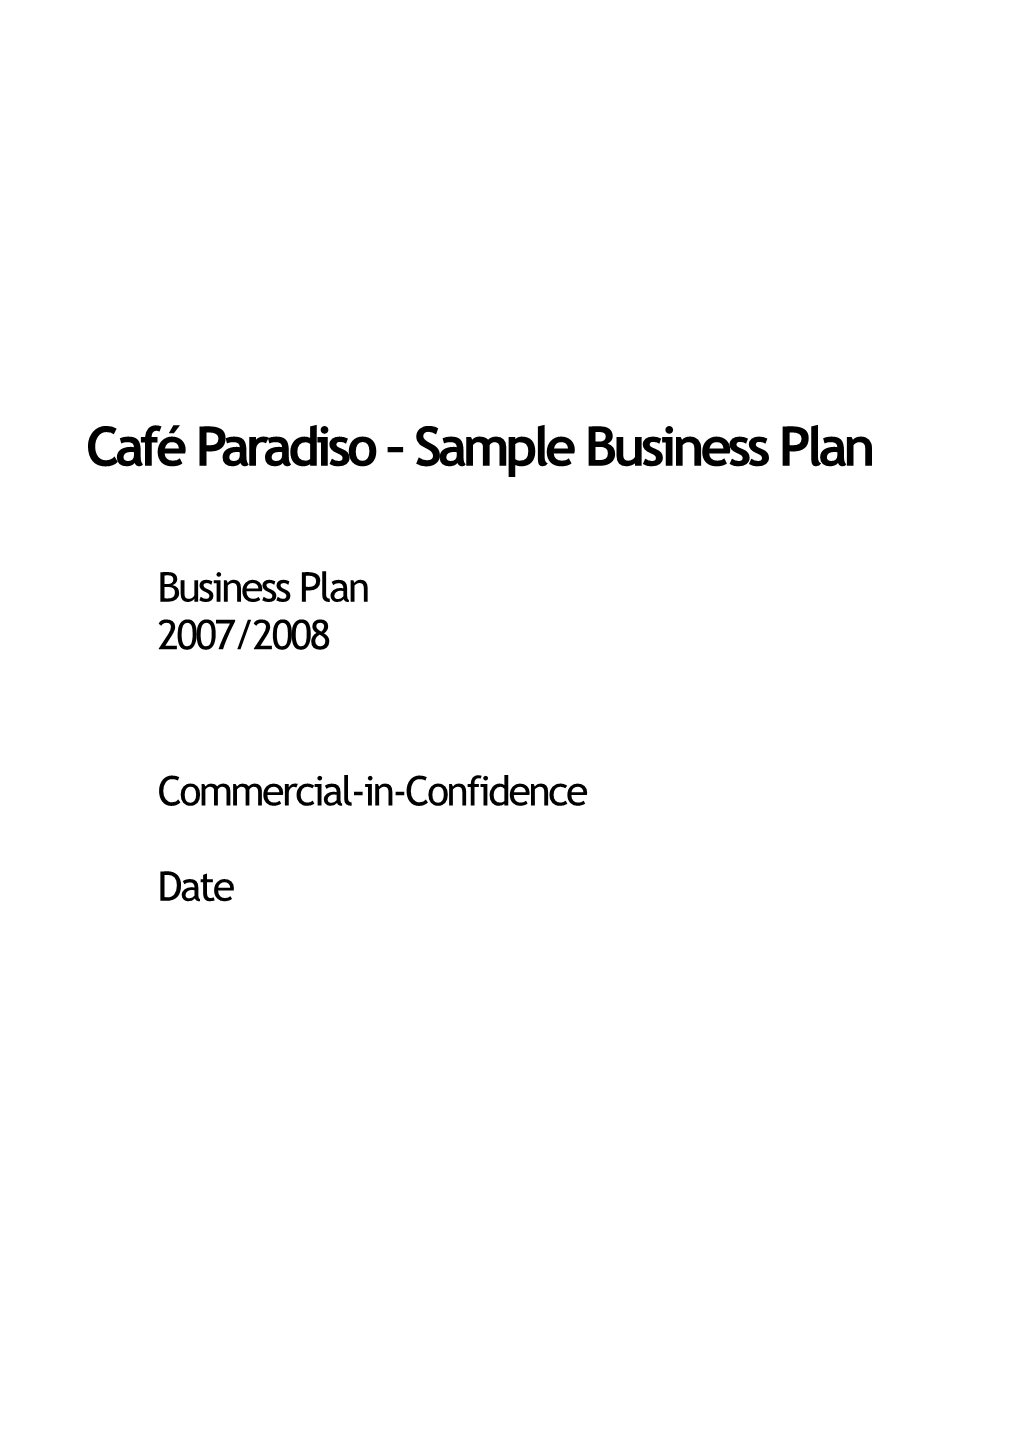 Café Paradiso Sample Business Plan